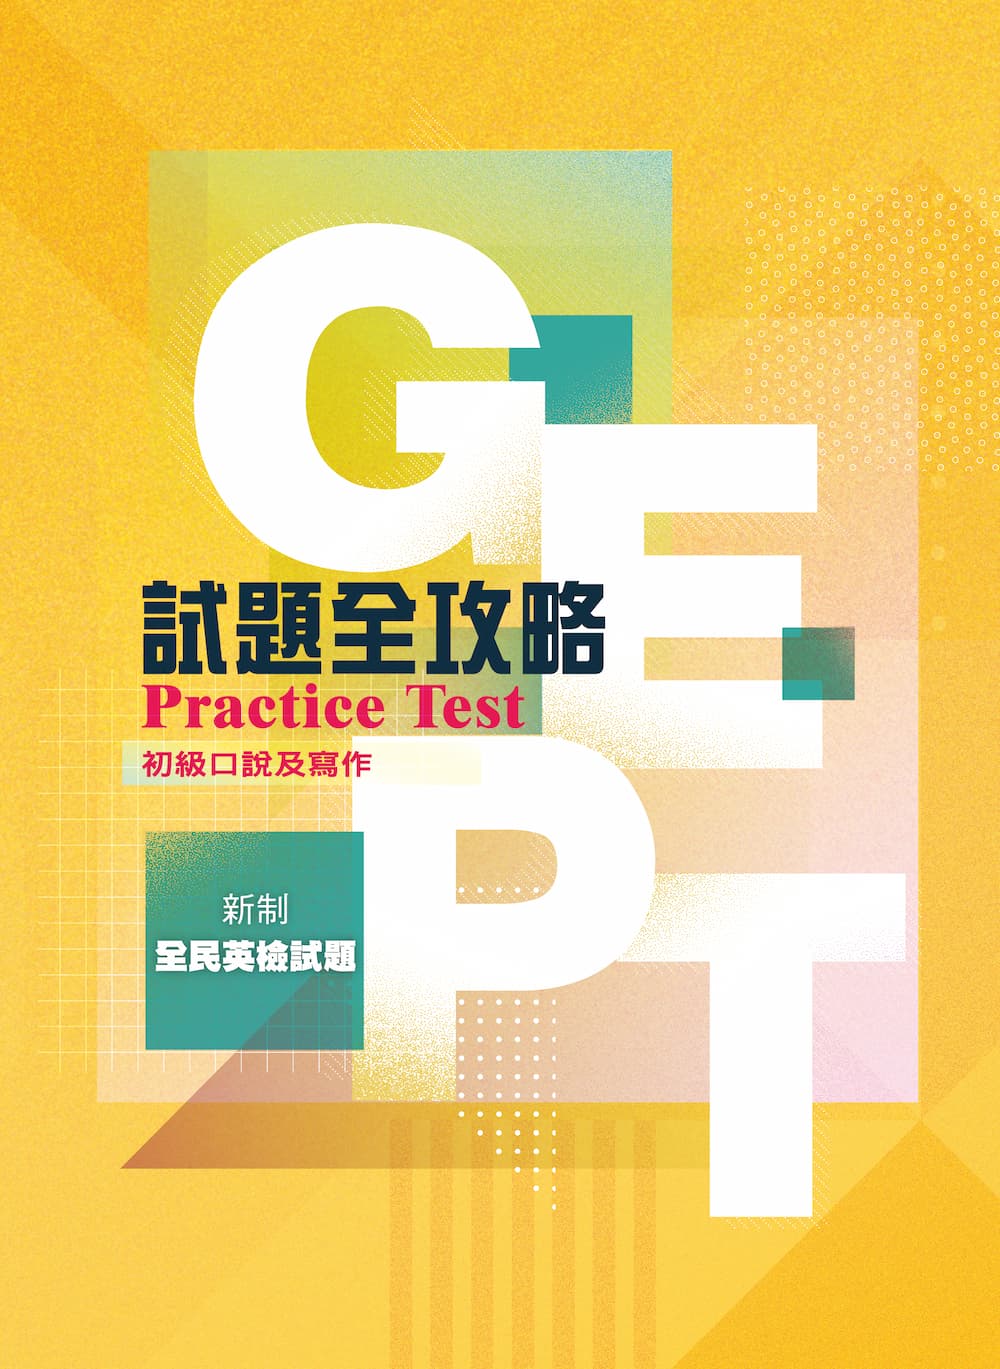 GEPTPracticeTest_elementary_speaking cover image